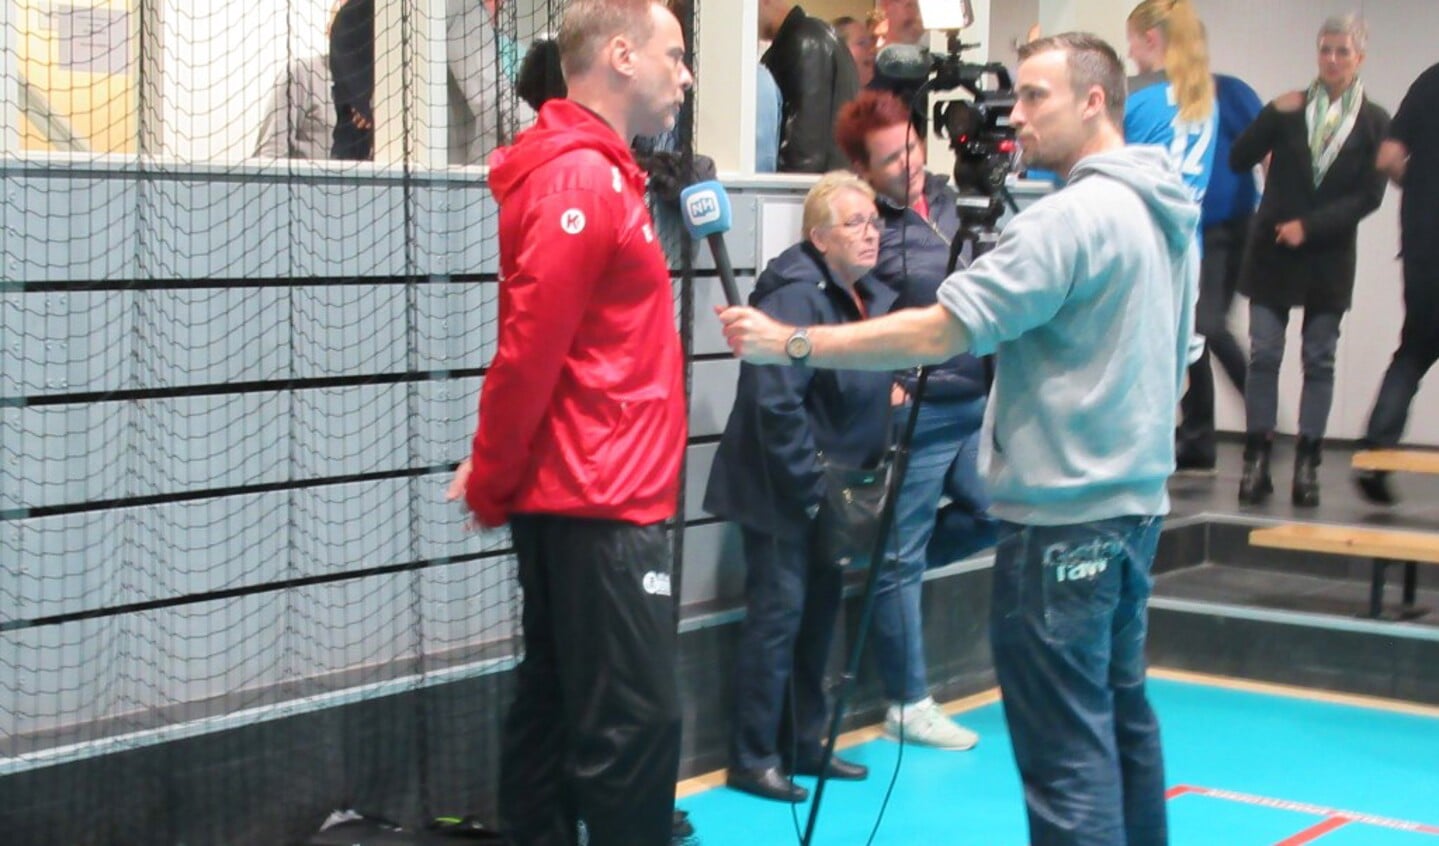 Wedstrijdanalyse Coach Rolf Schulte bij RTV-NH sport.

